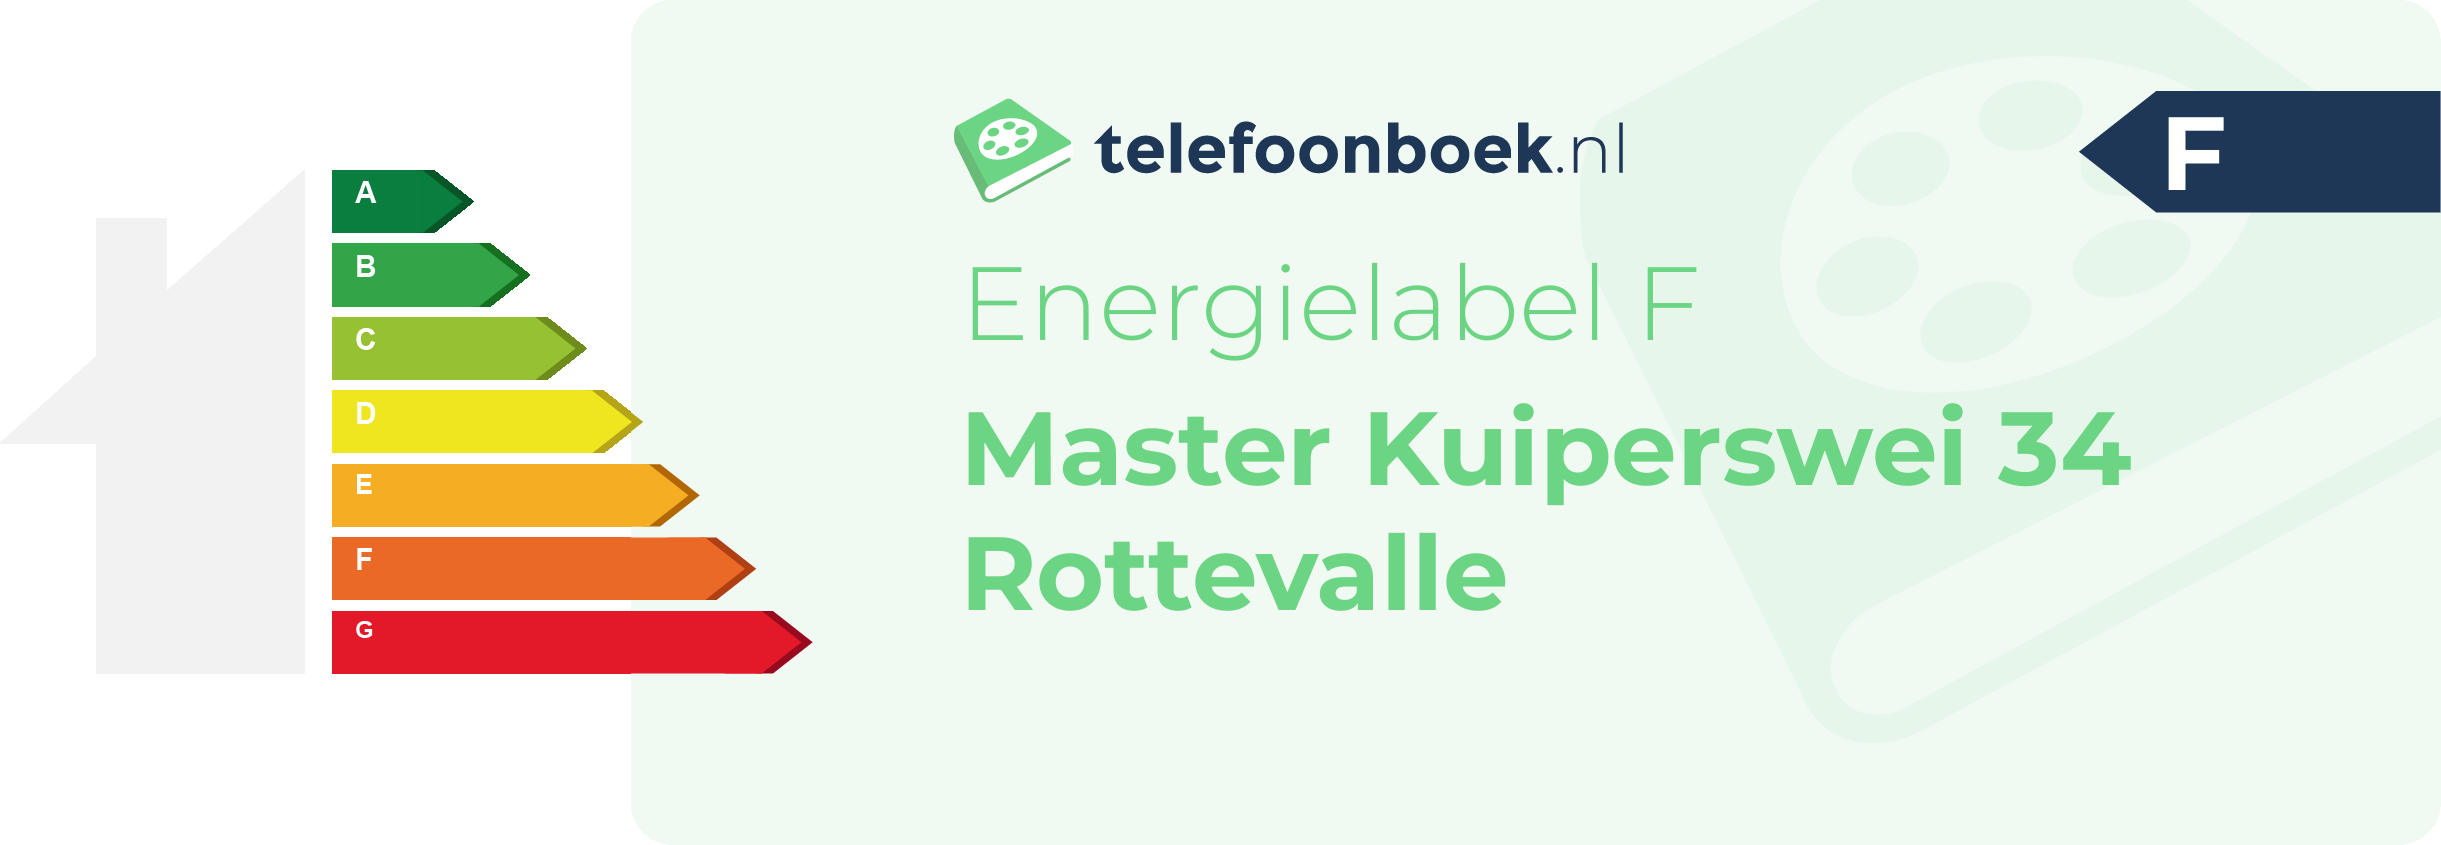 Energielabel Master Kuiperswei 34 Rottevalle